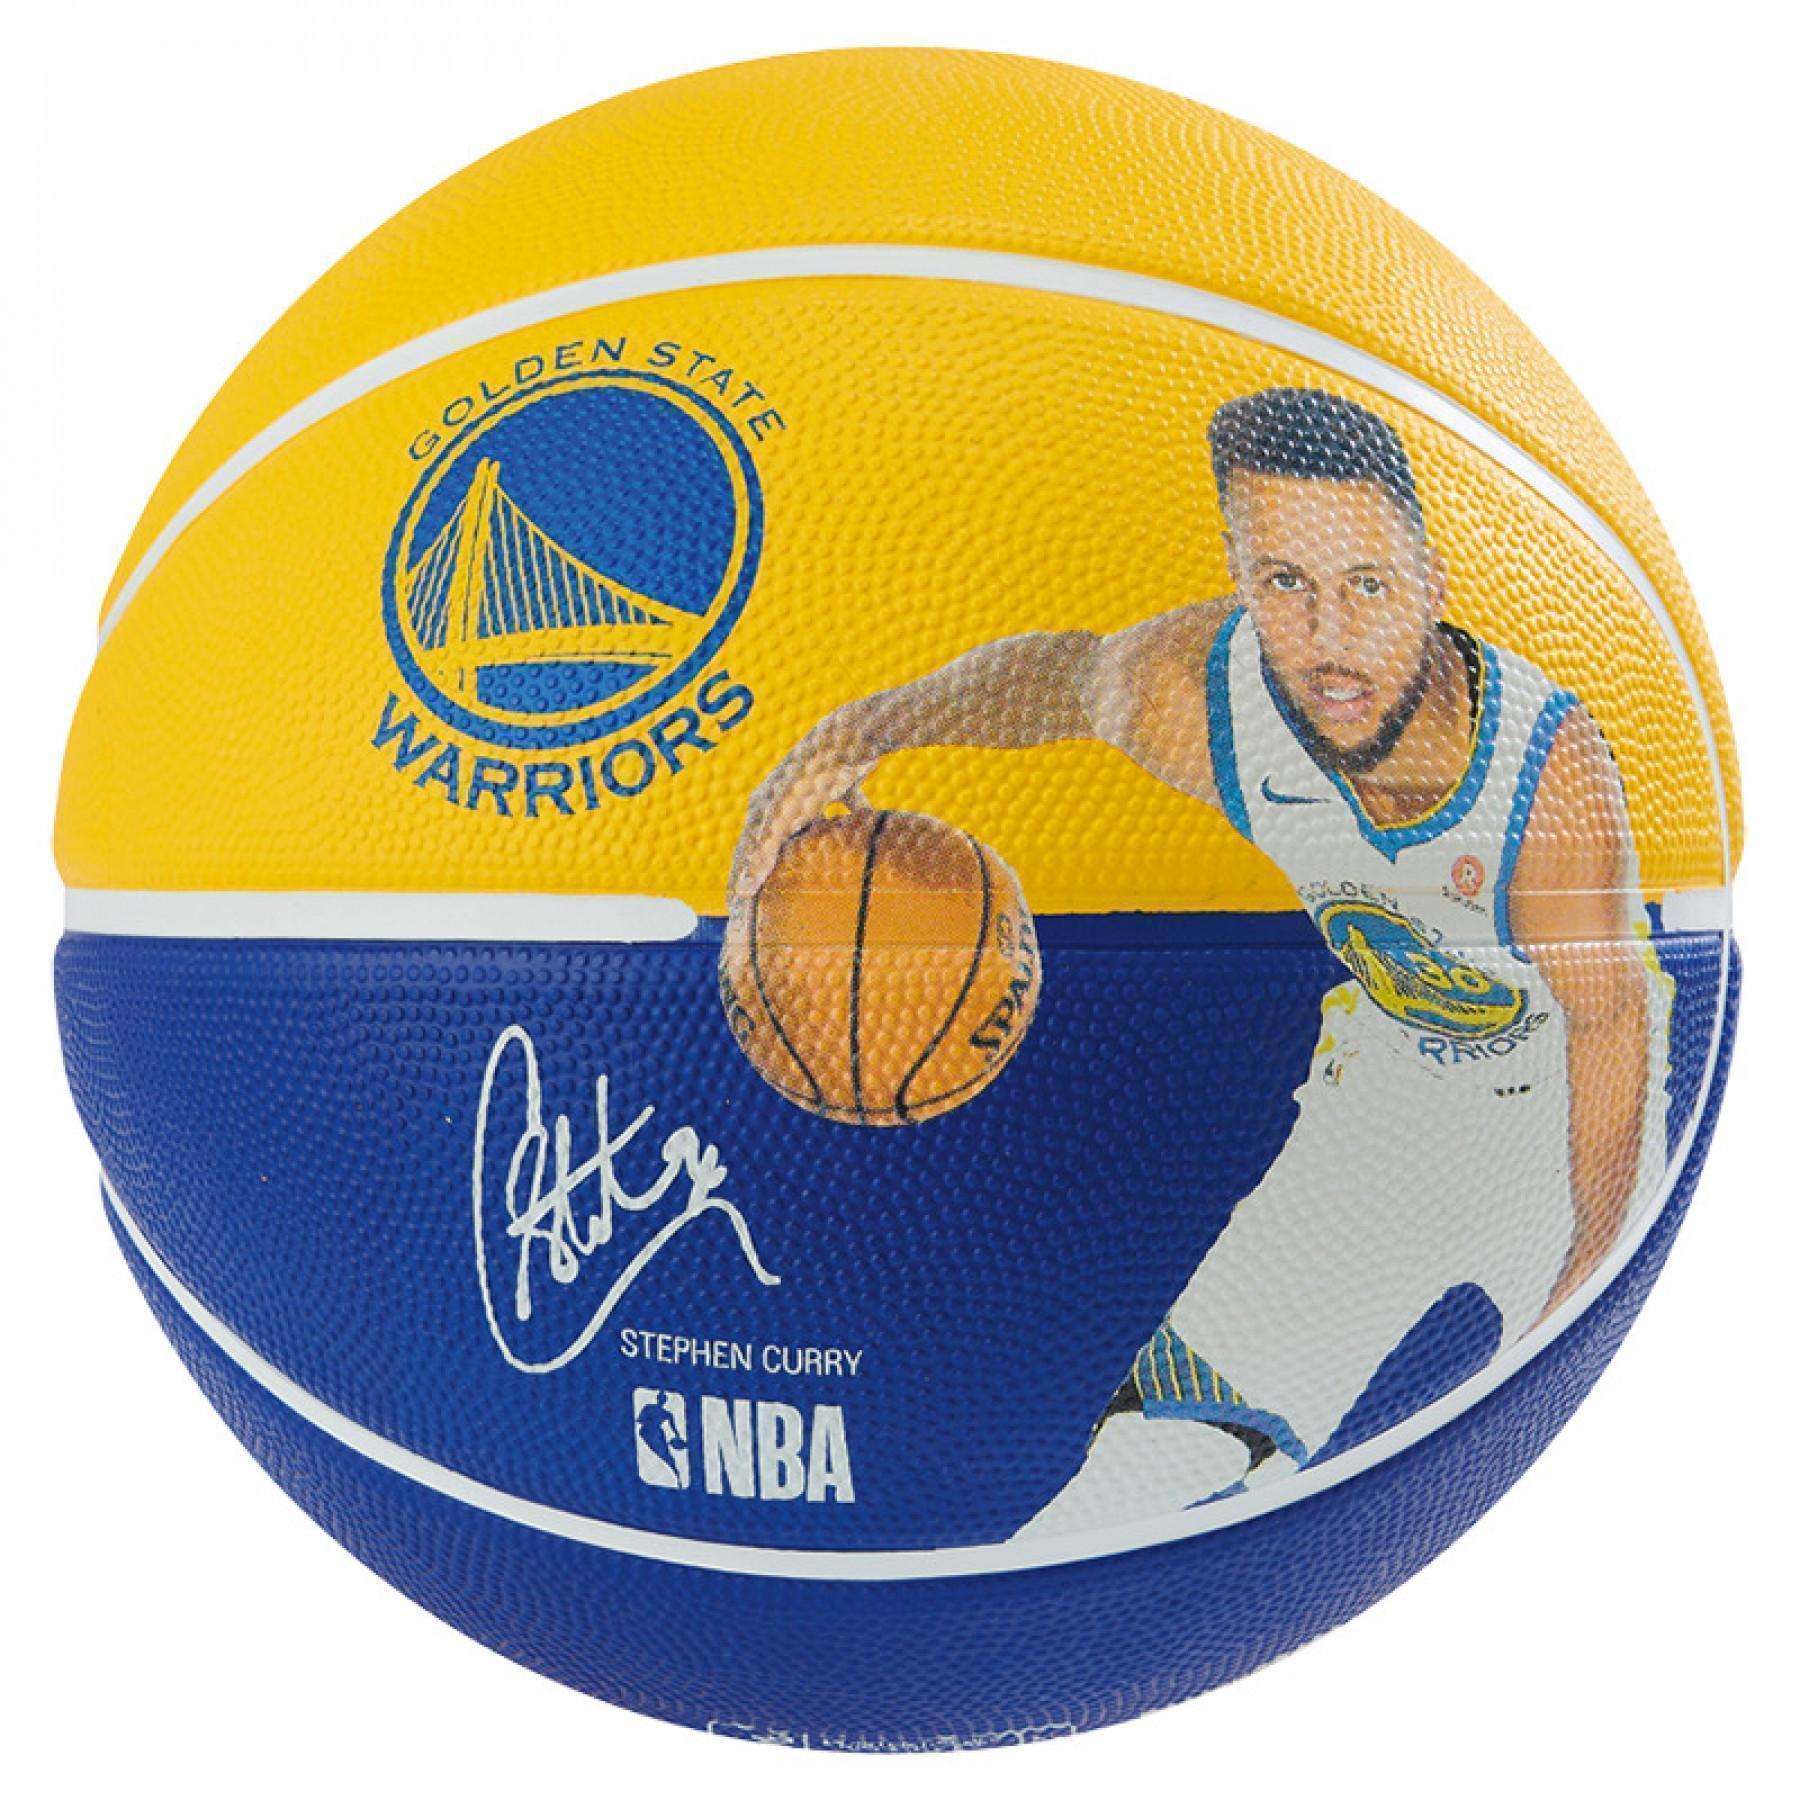 Balloon Spalding NBA Player Stephen Curry (83-866z)